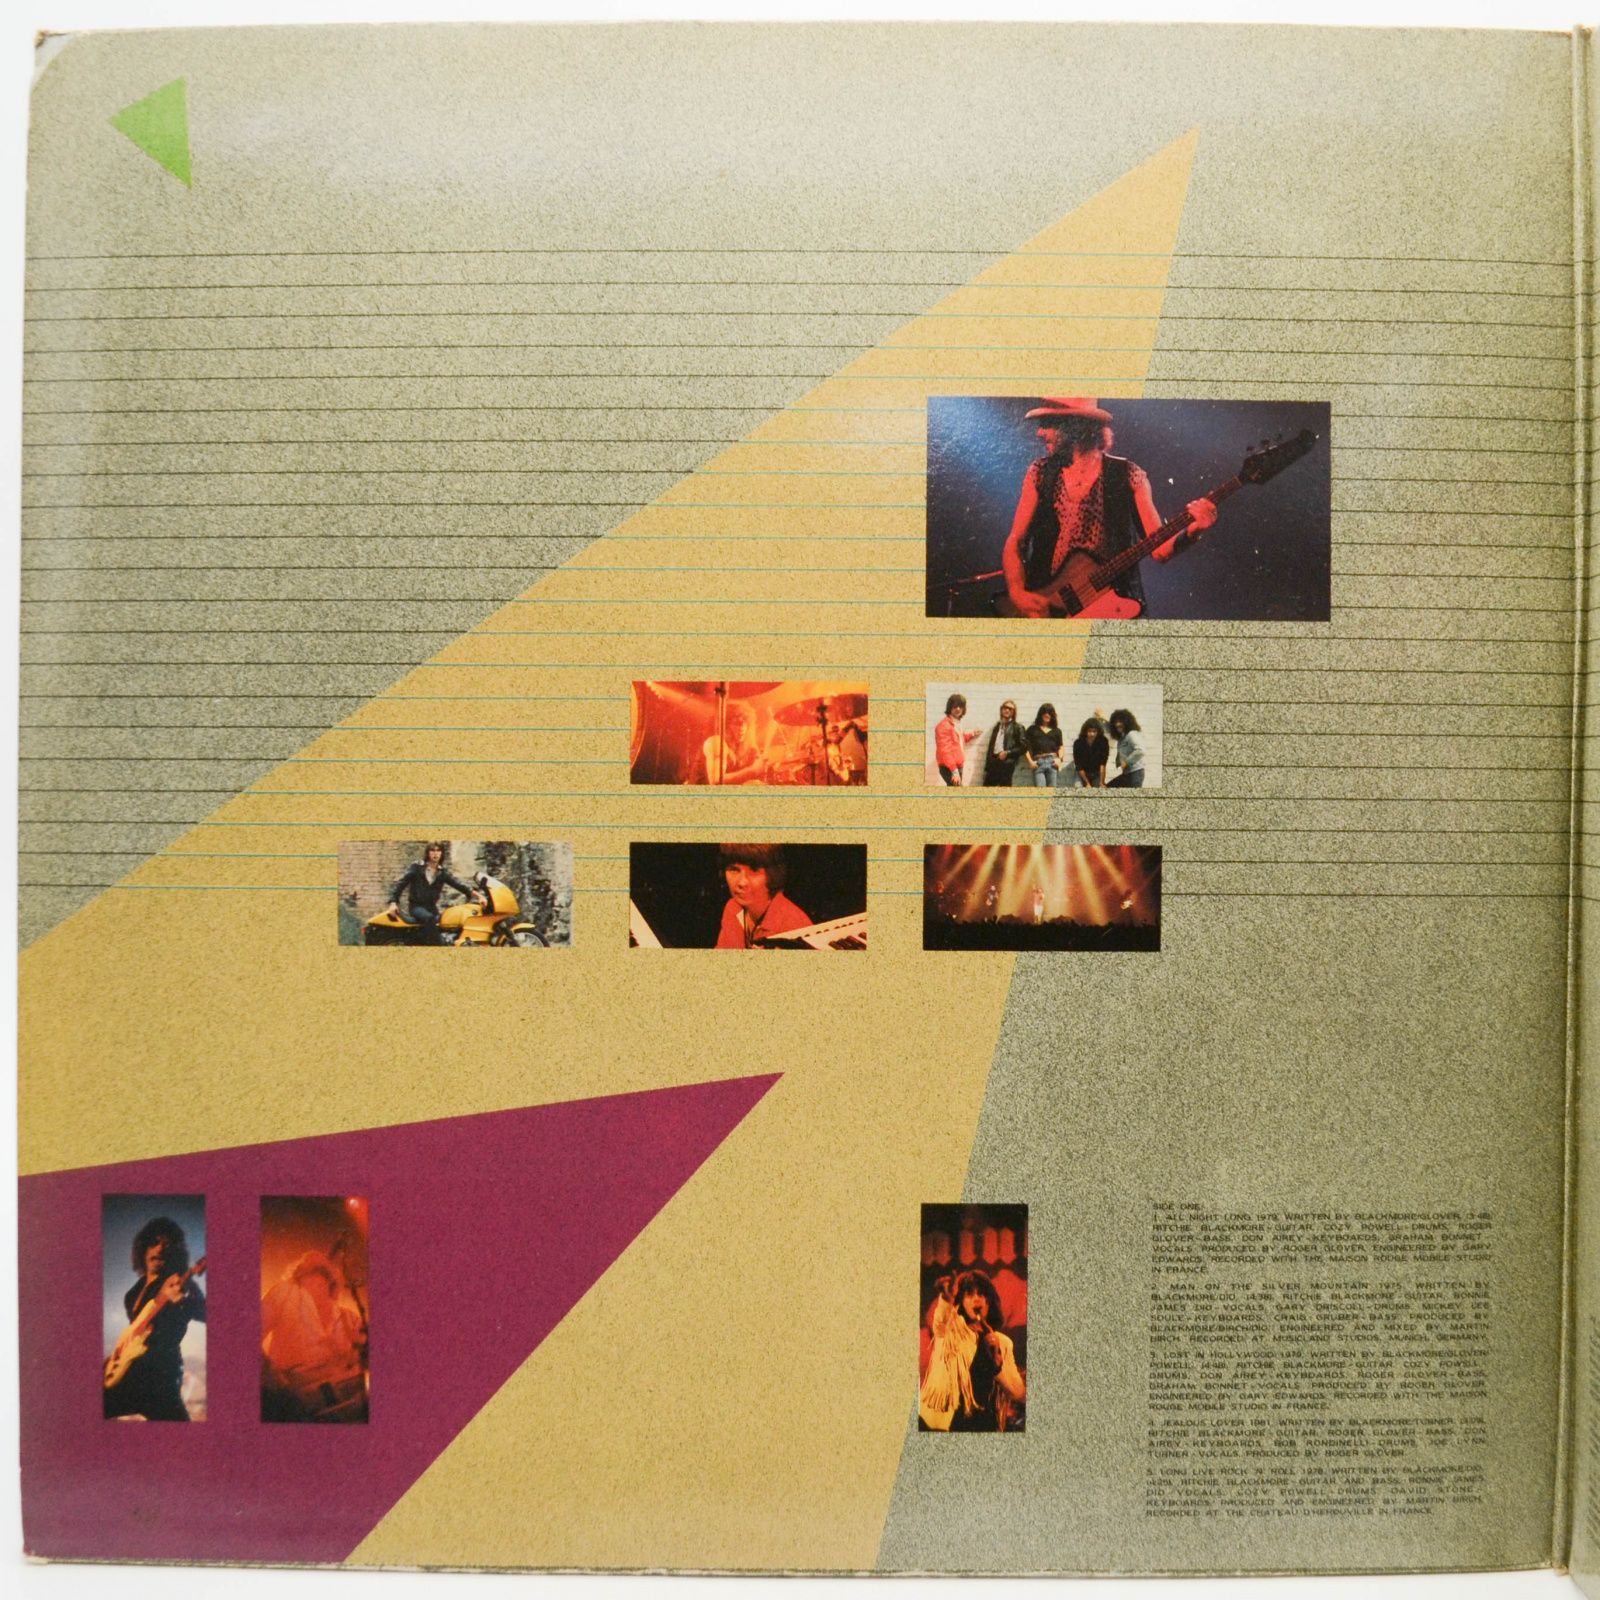 Rainbow — The Best Of Rainbow (2LP), 1981